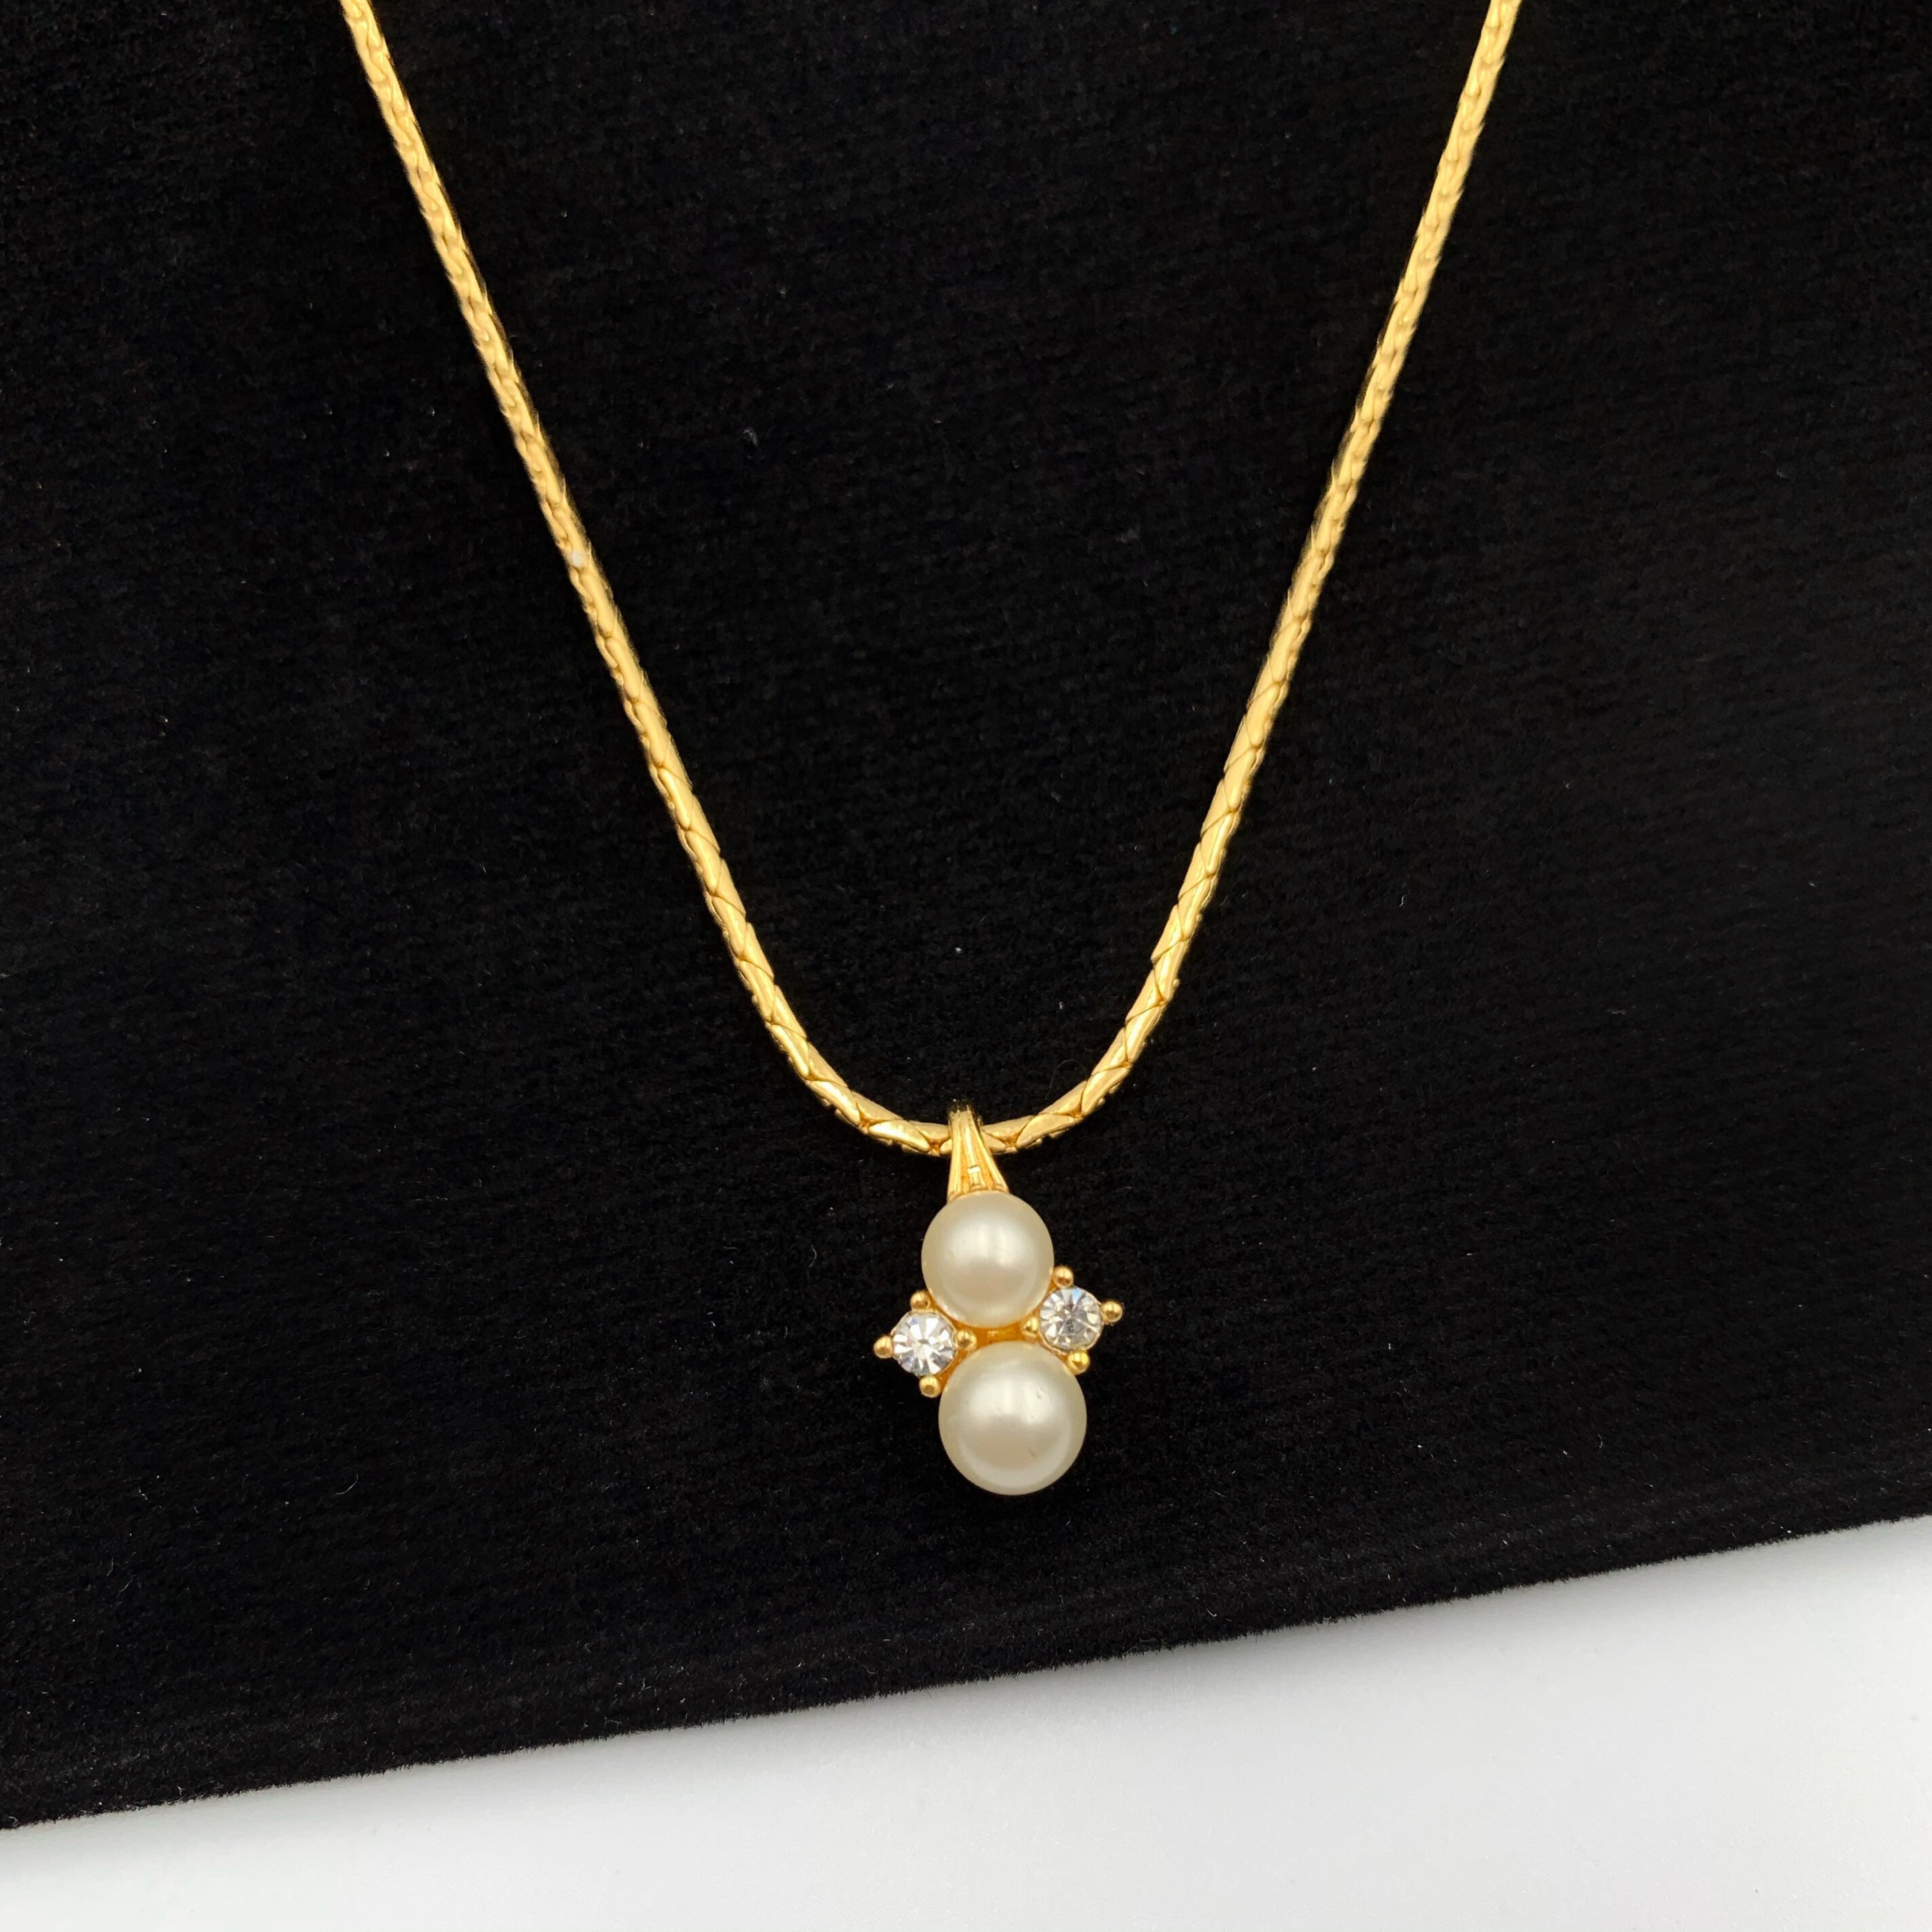 Dior Pearls Necklace Top Sellers GET 58 OFF wwwislandcrematoriumie